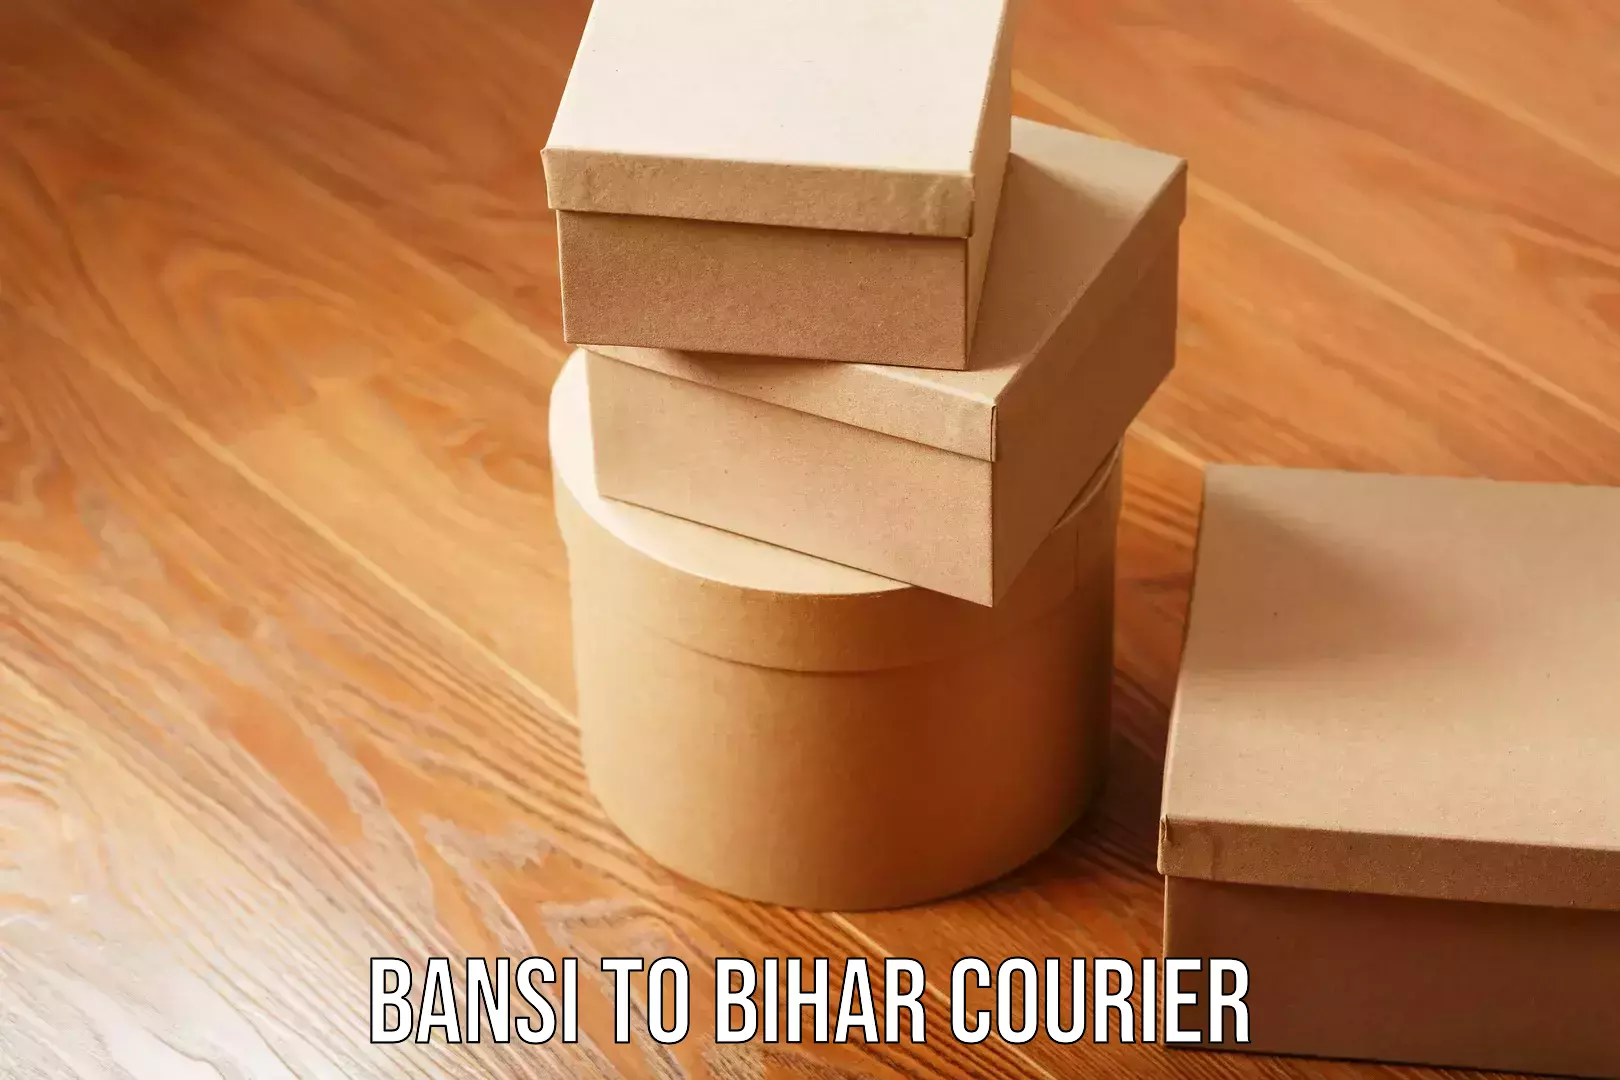 Digital courier platforms Bansi to Bihar